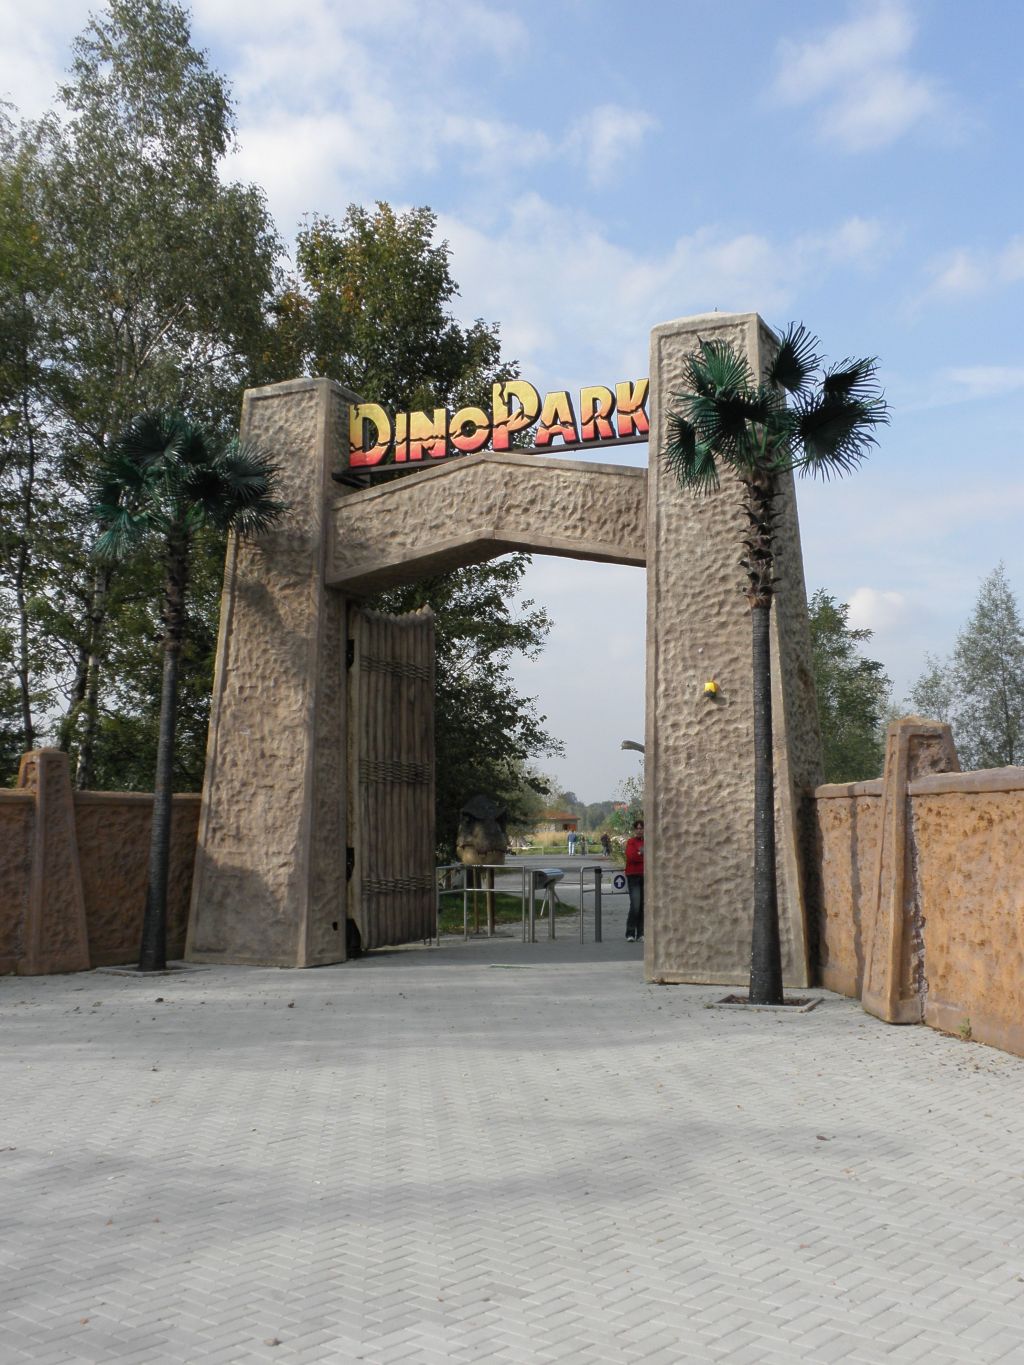 DinoPark Ostrava